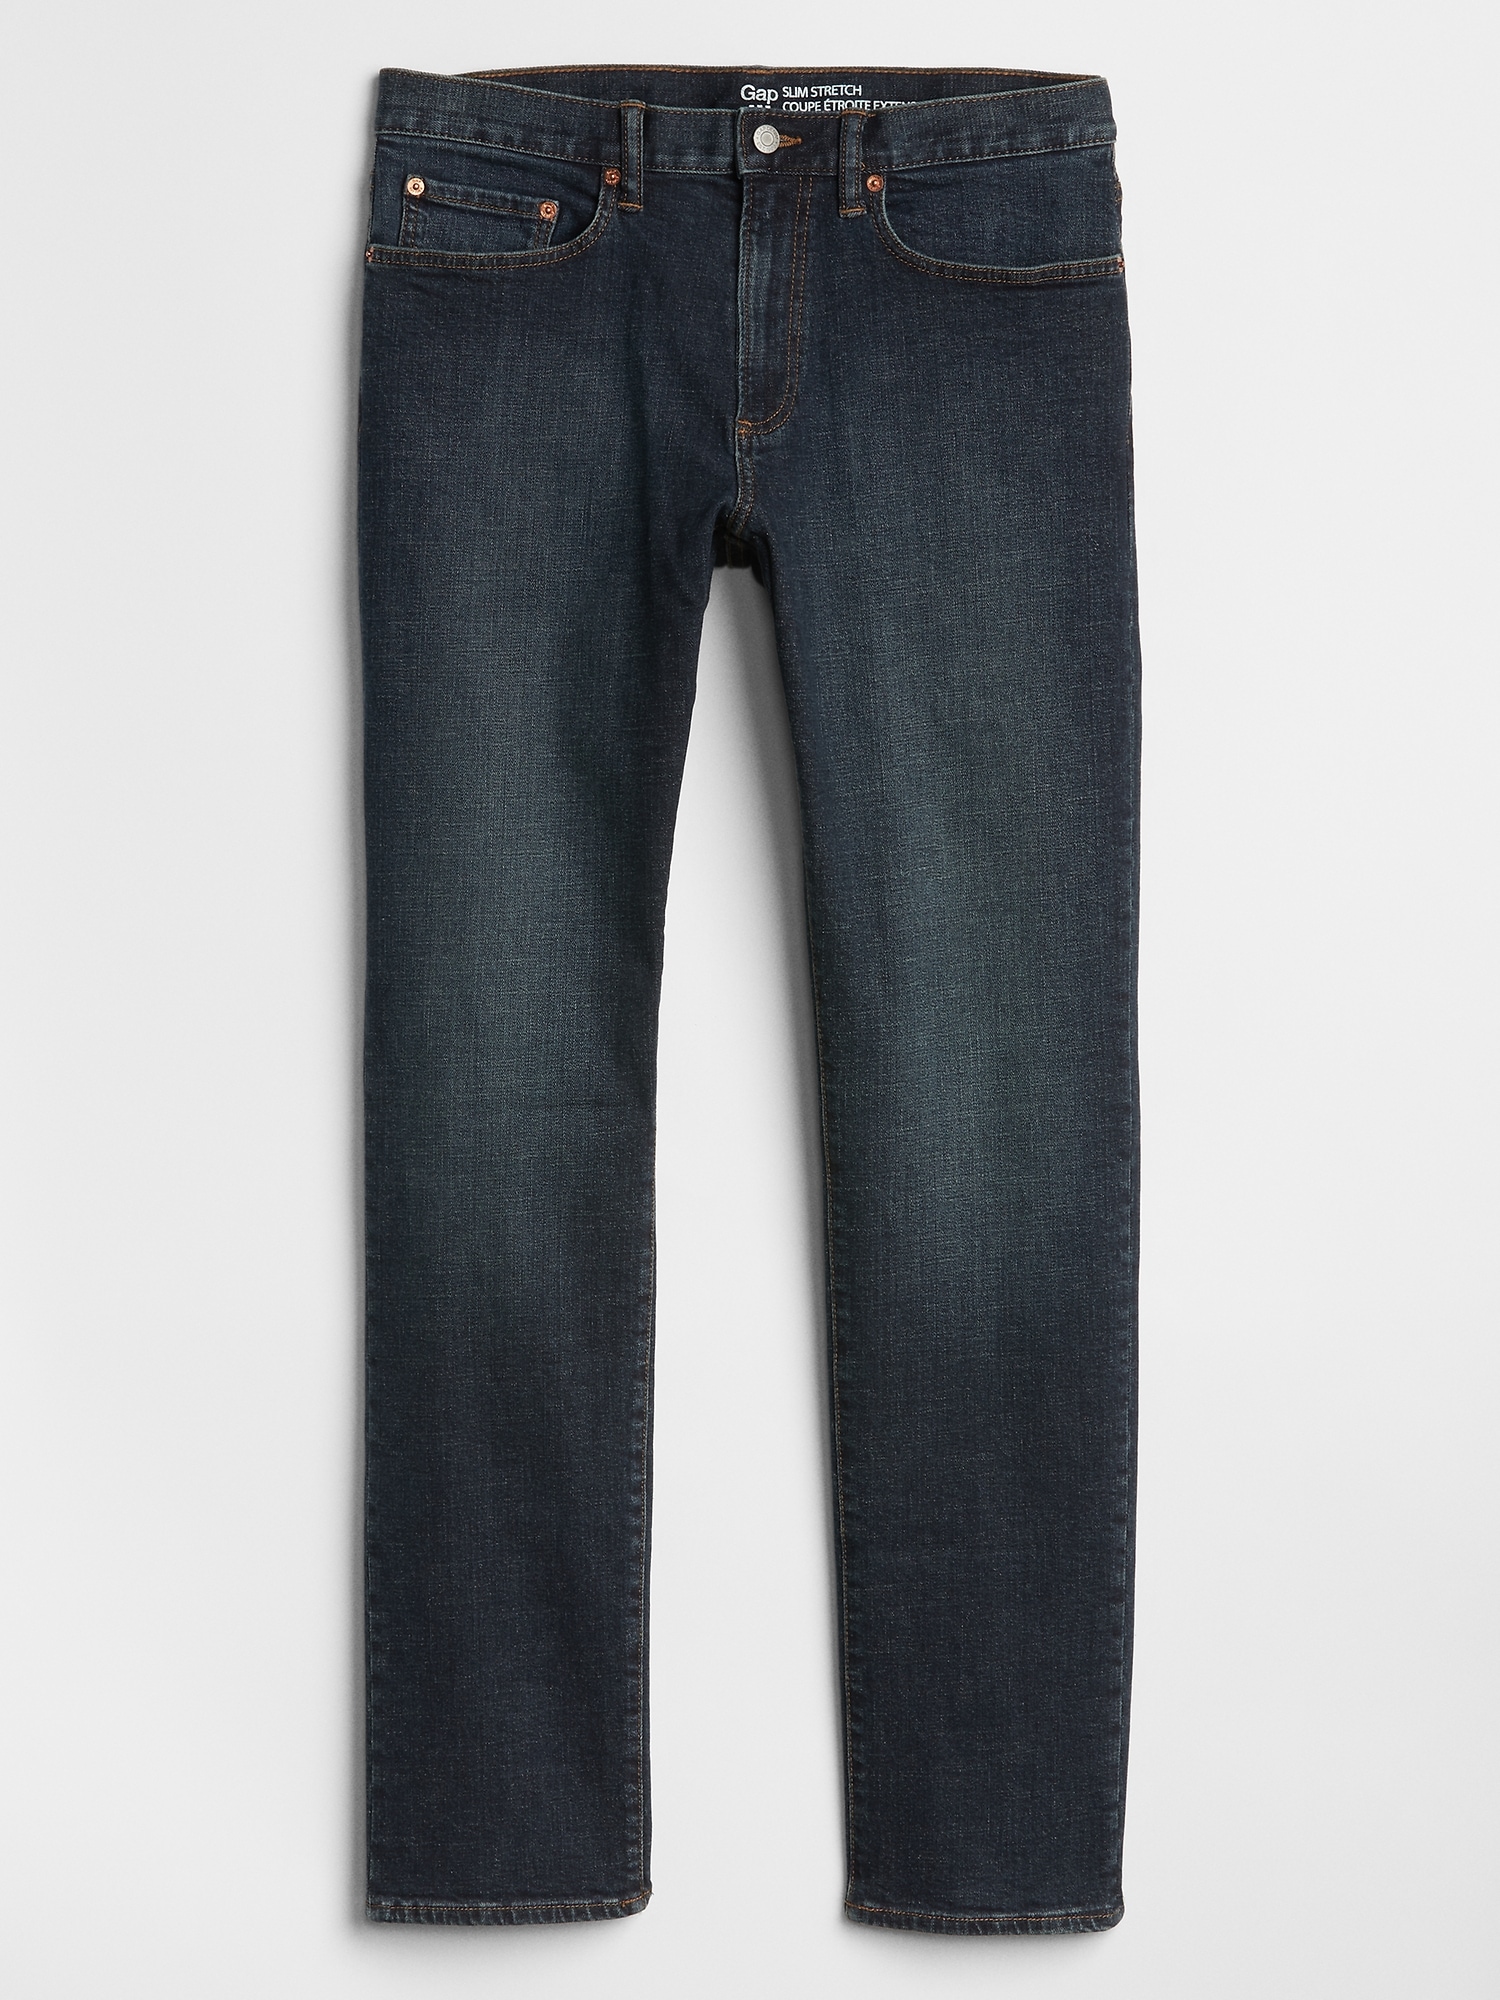 gap slim fit jeans